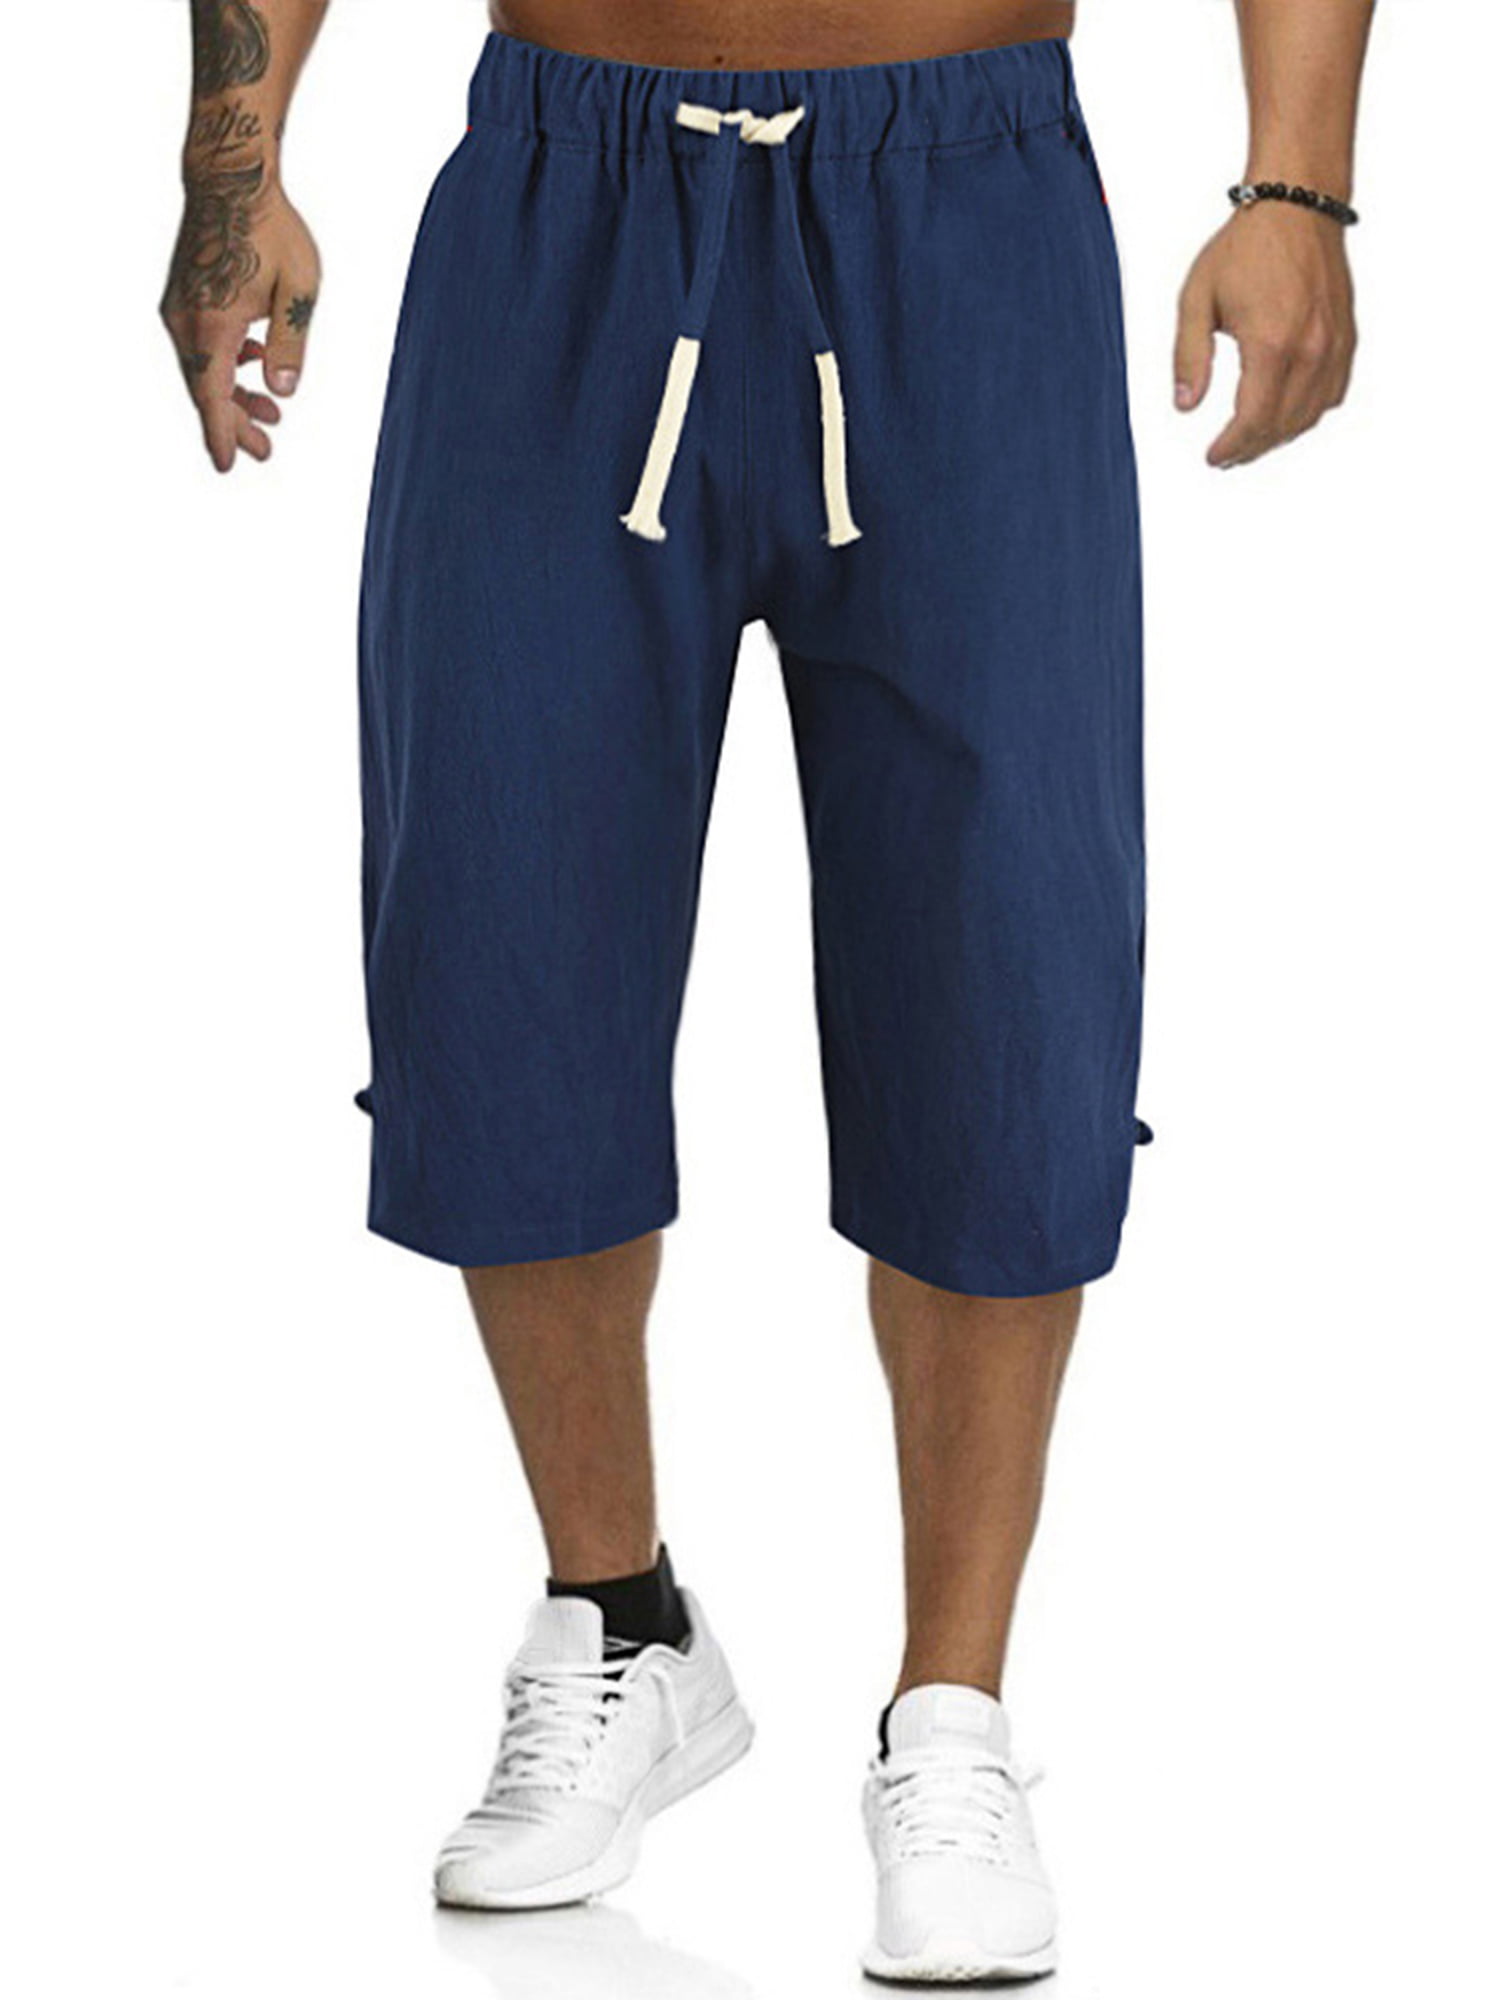 Basketball Shoes Men Mens Fashion Casual Classic Beach Shorts Quick-Dry Gym Adjustable Drawstring Shorts Yoga 